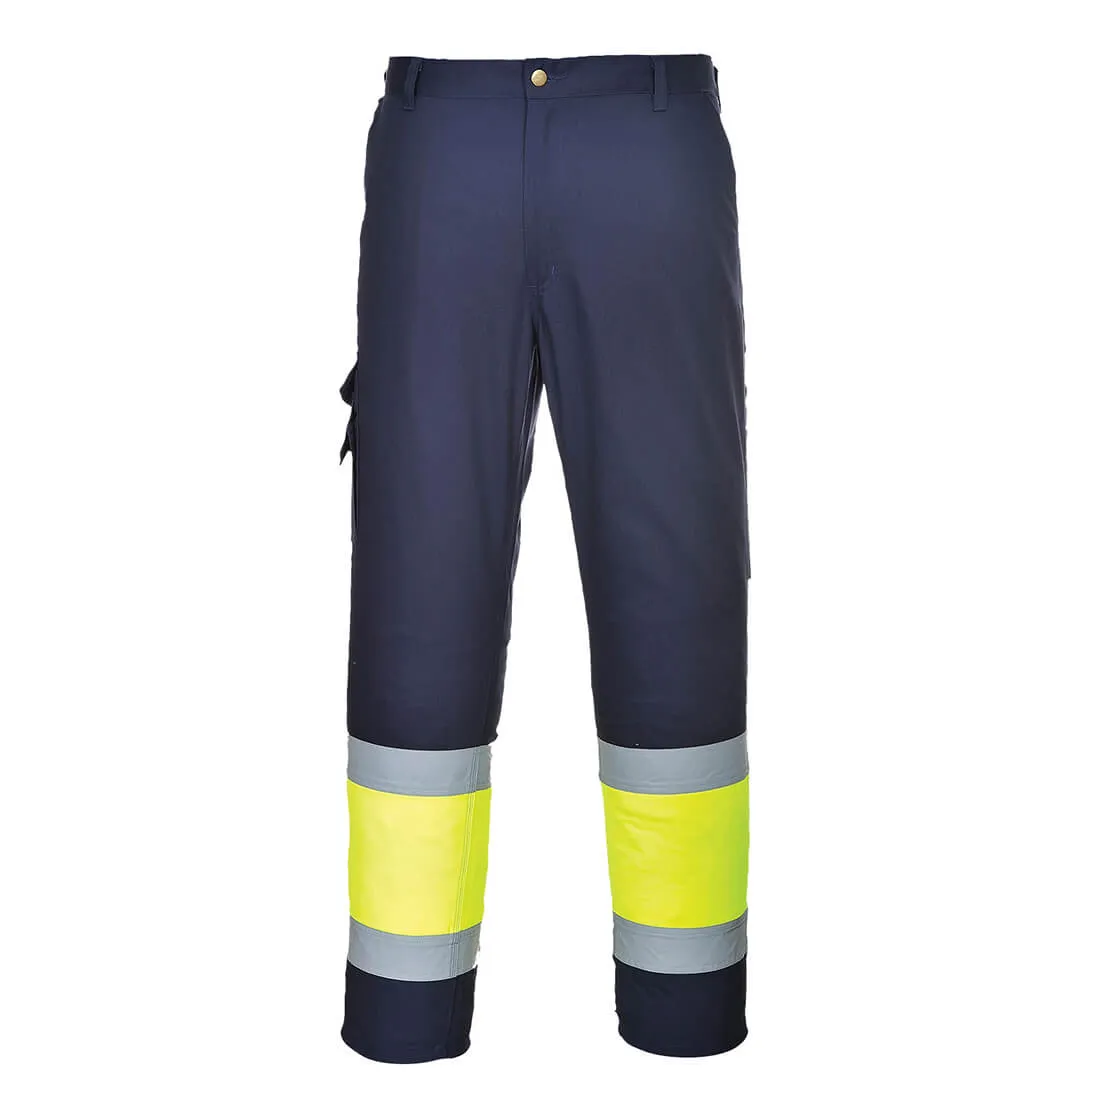 Portwest Hi Vis Two Tone Combat Trousers - Yellow / Navy, 2XL, 32"